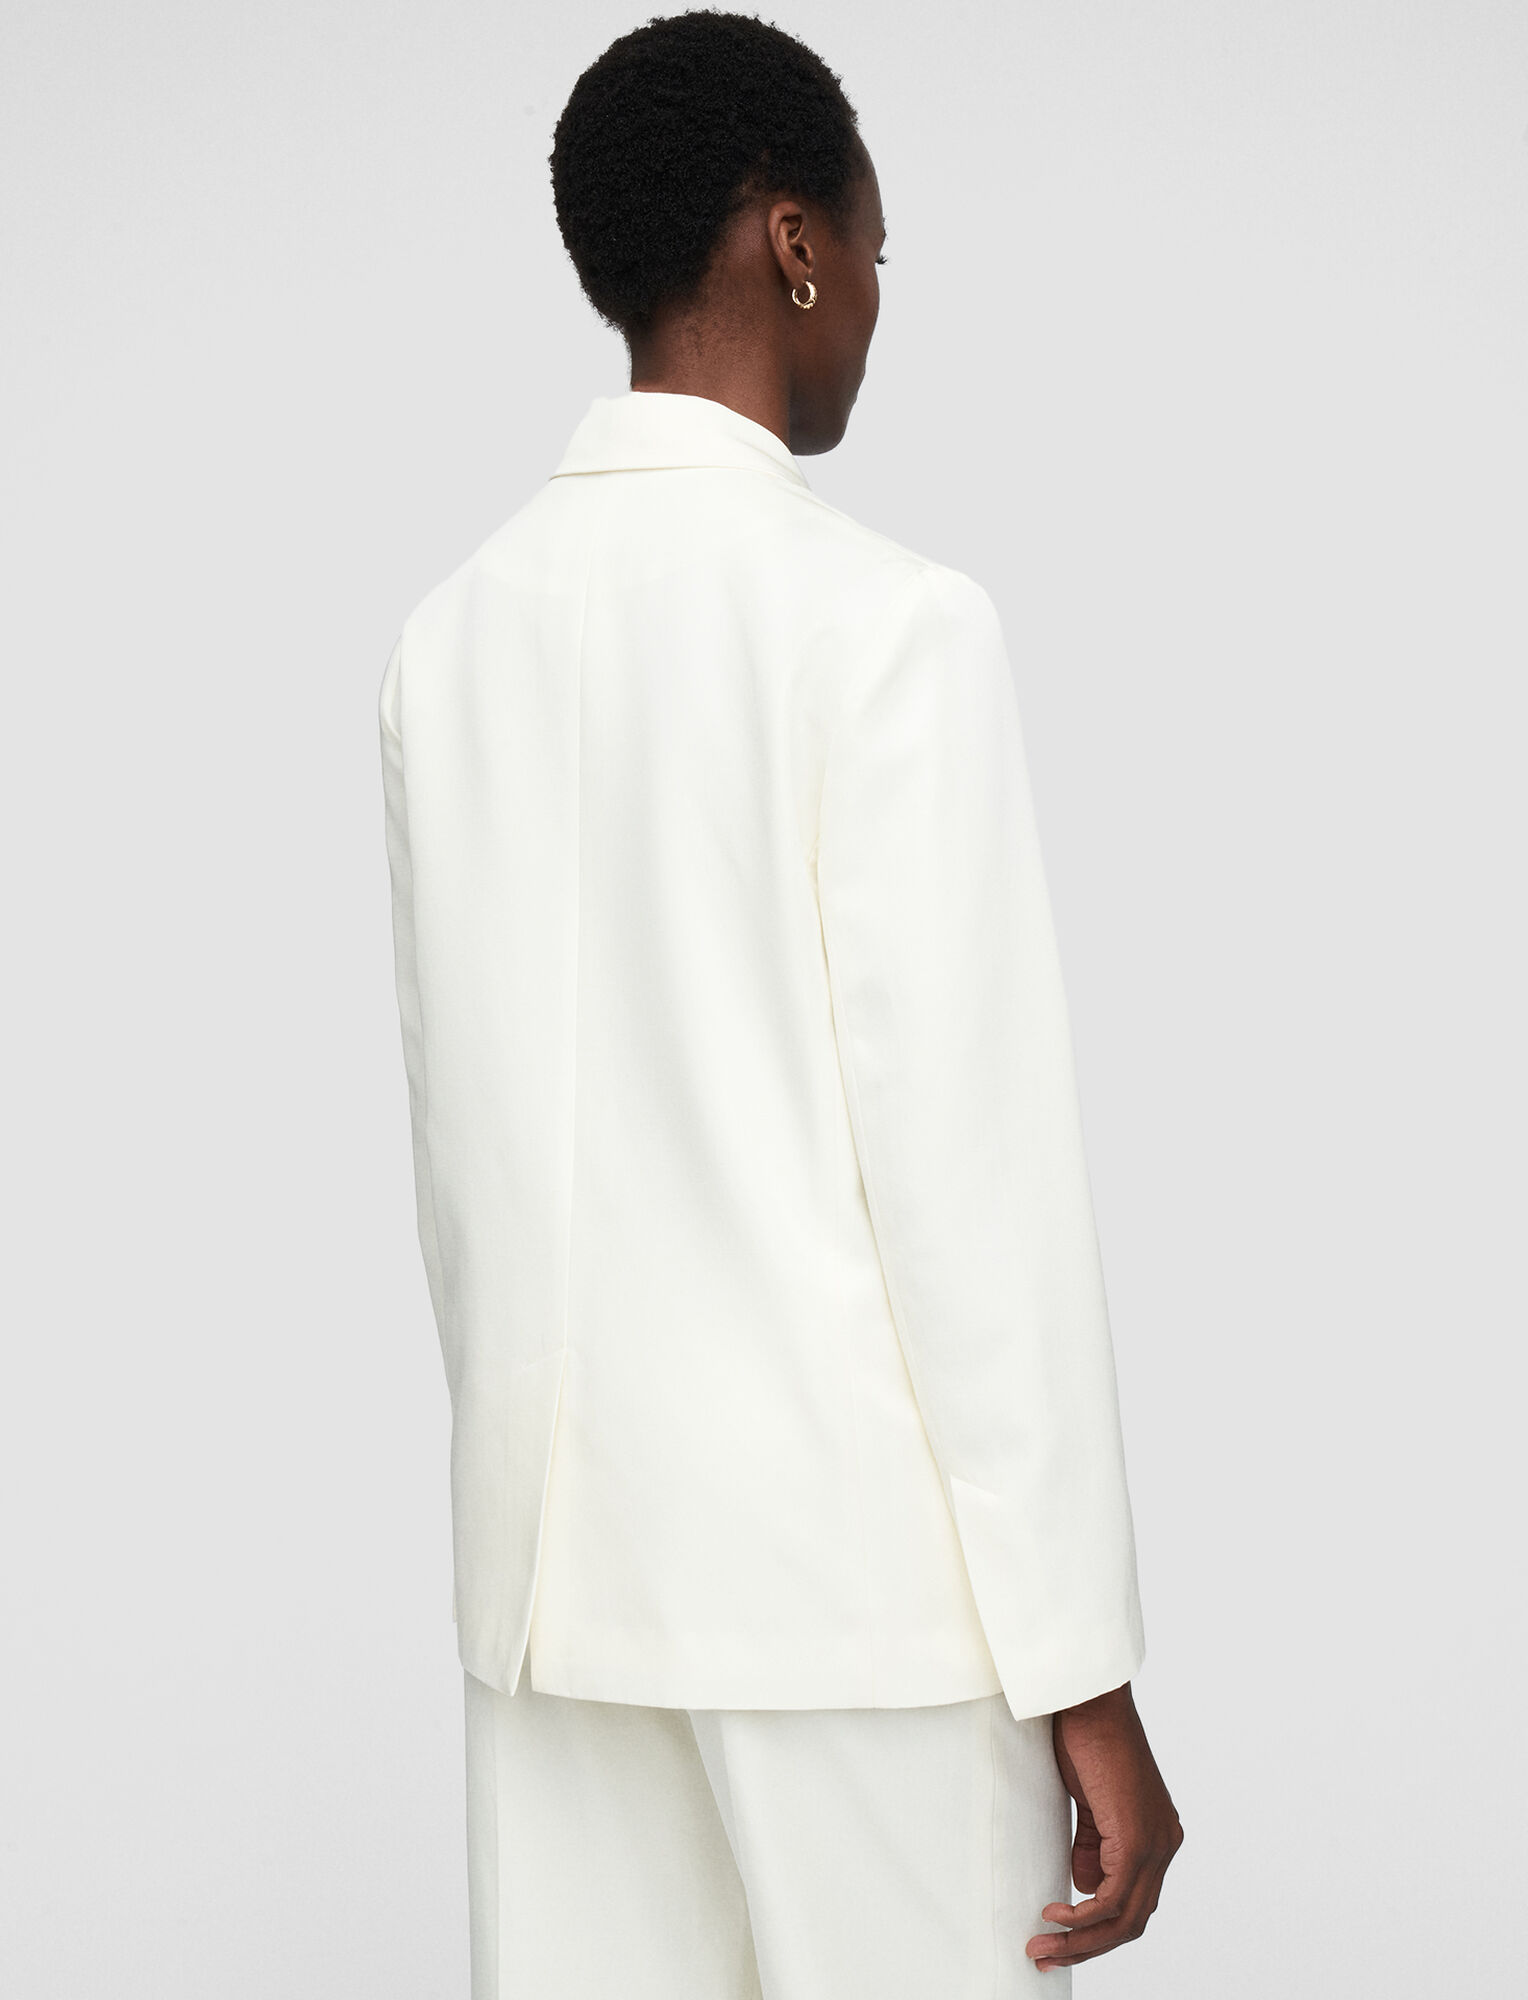 Joseph, Soft Cotton Silk Jacoba Jacket, in Ivory